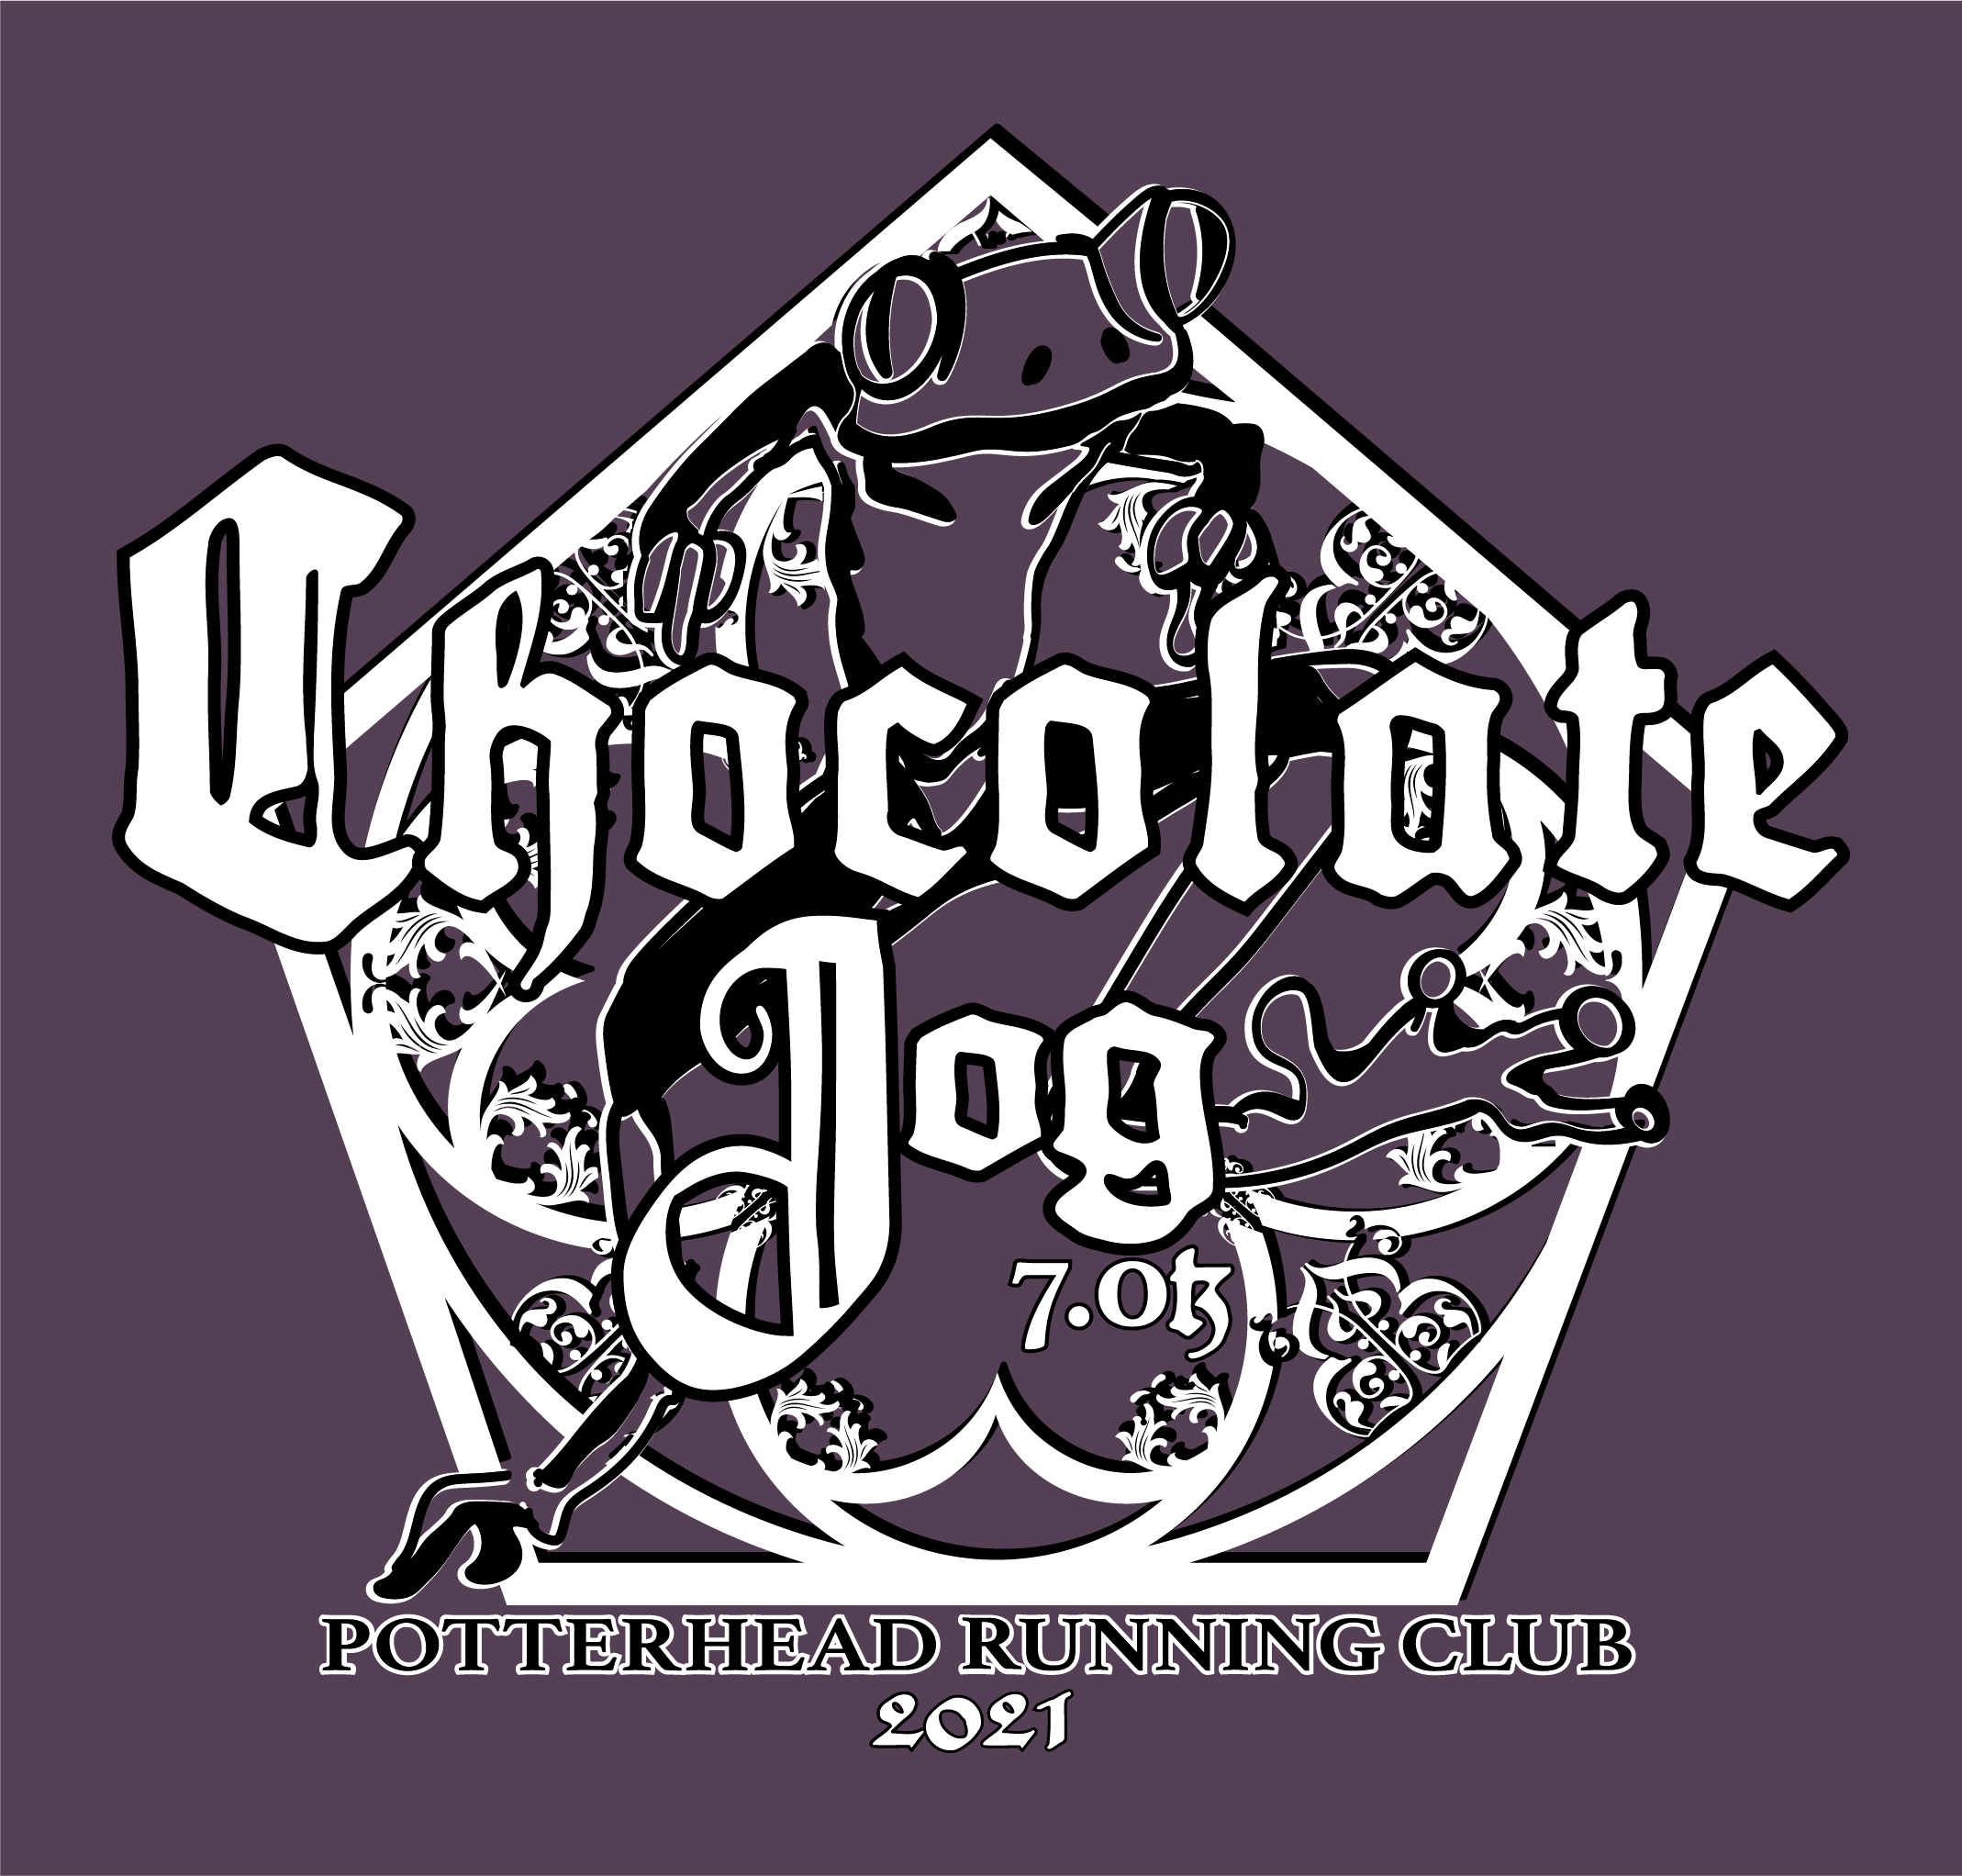 PHRC Chocolate Jog 7k shirt design - zoomed